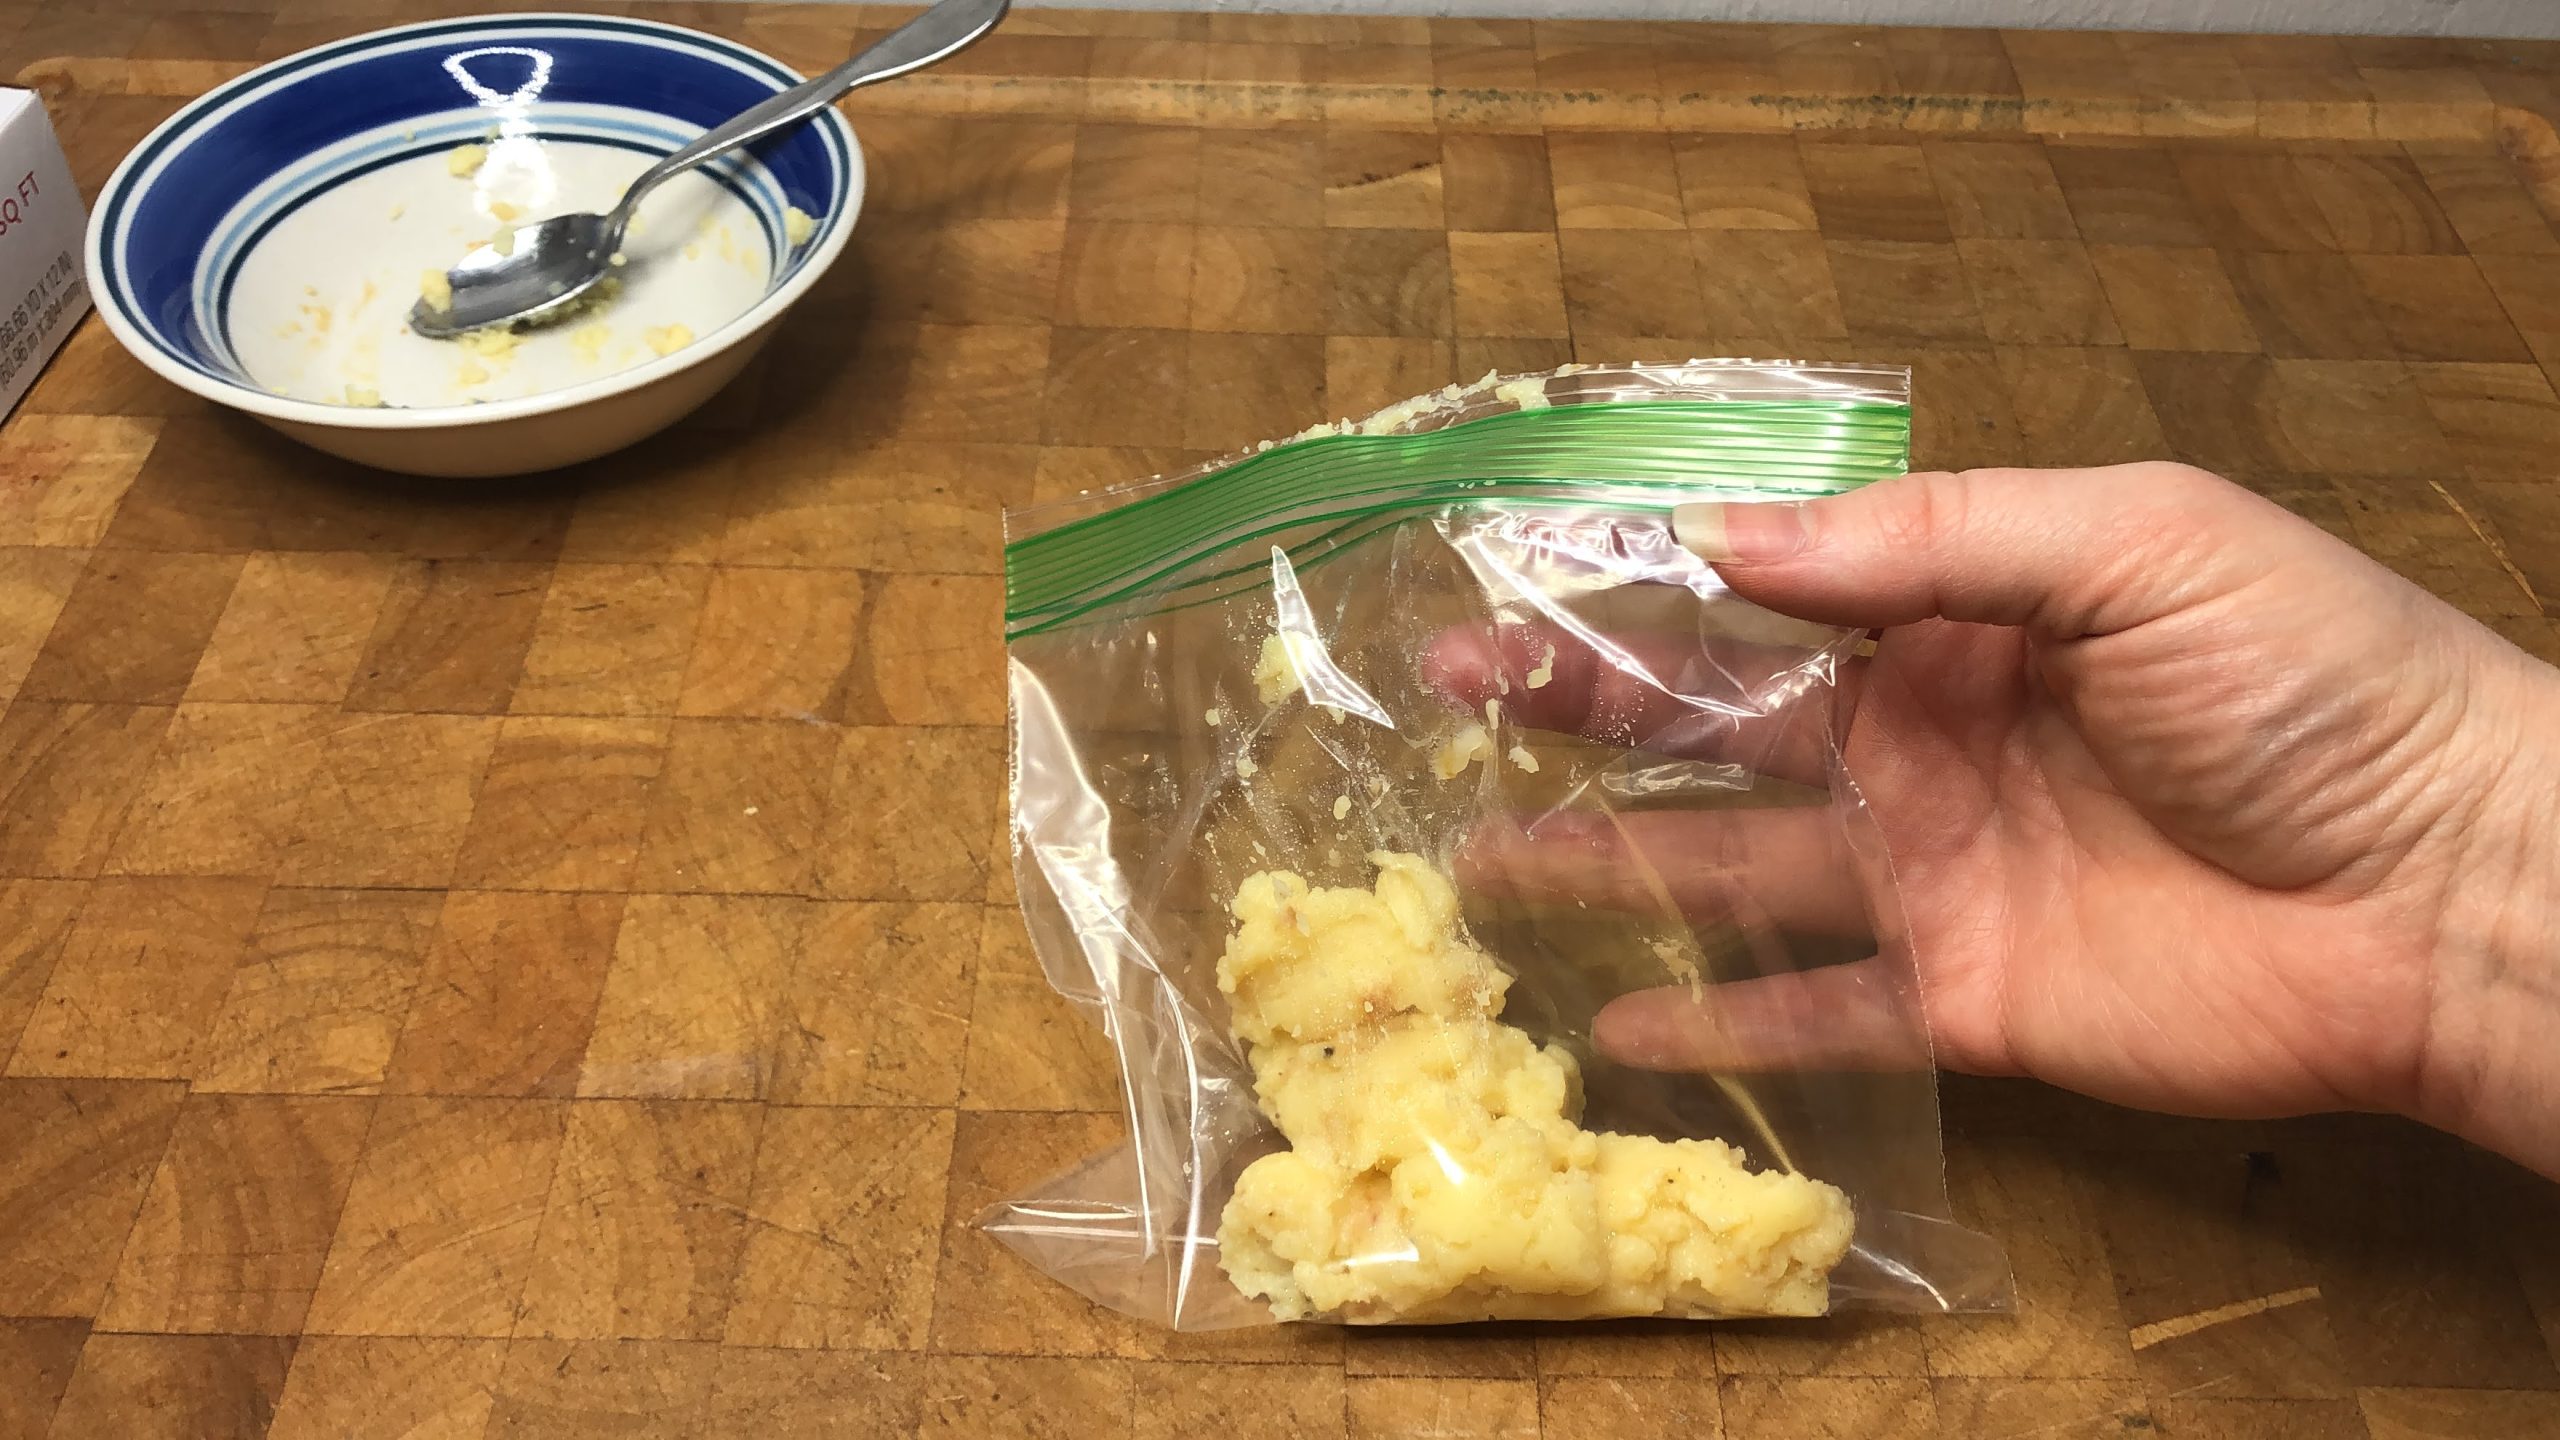 zipping freezer bag of custard shut